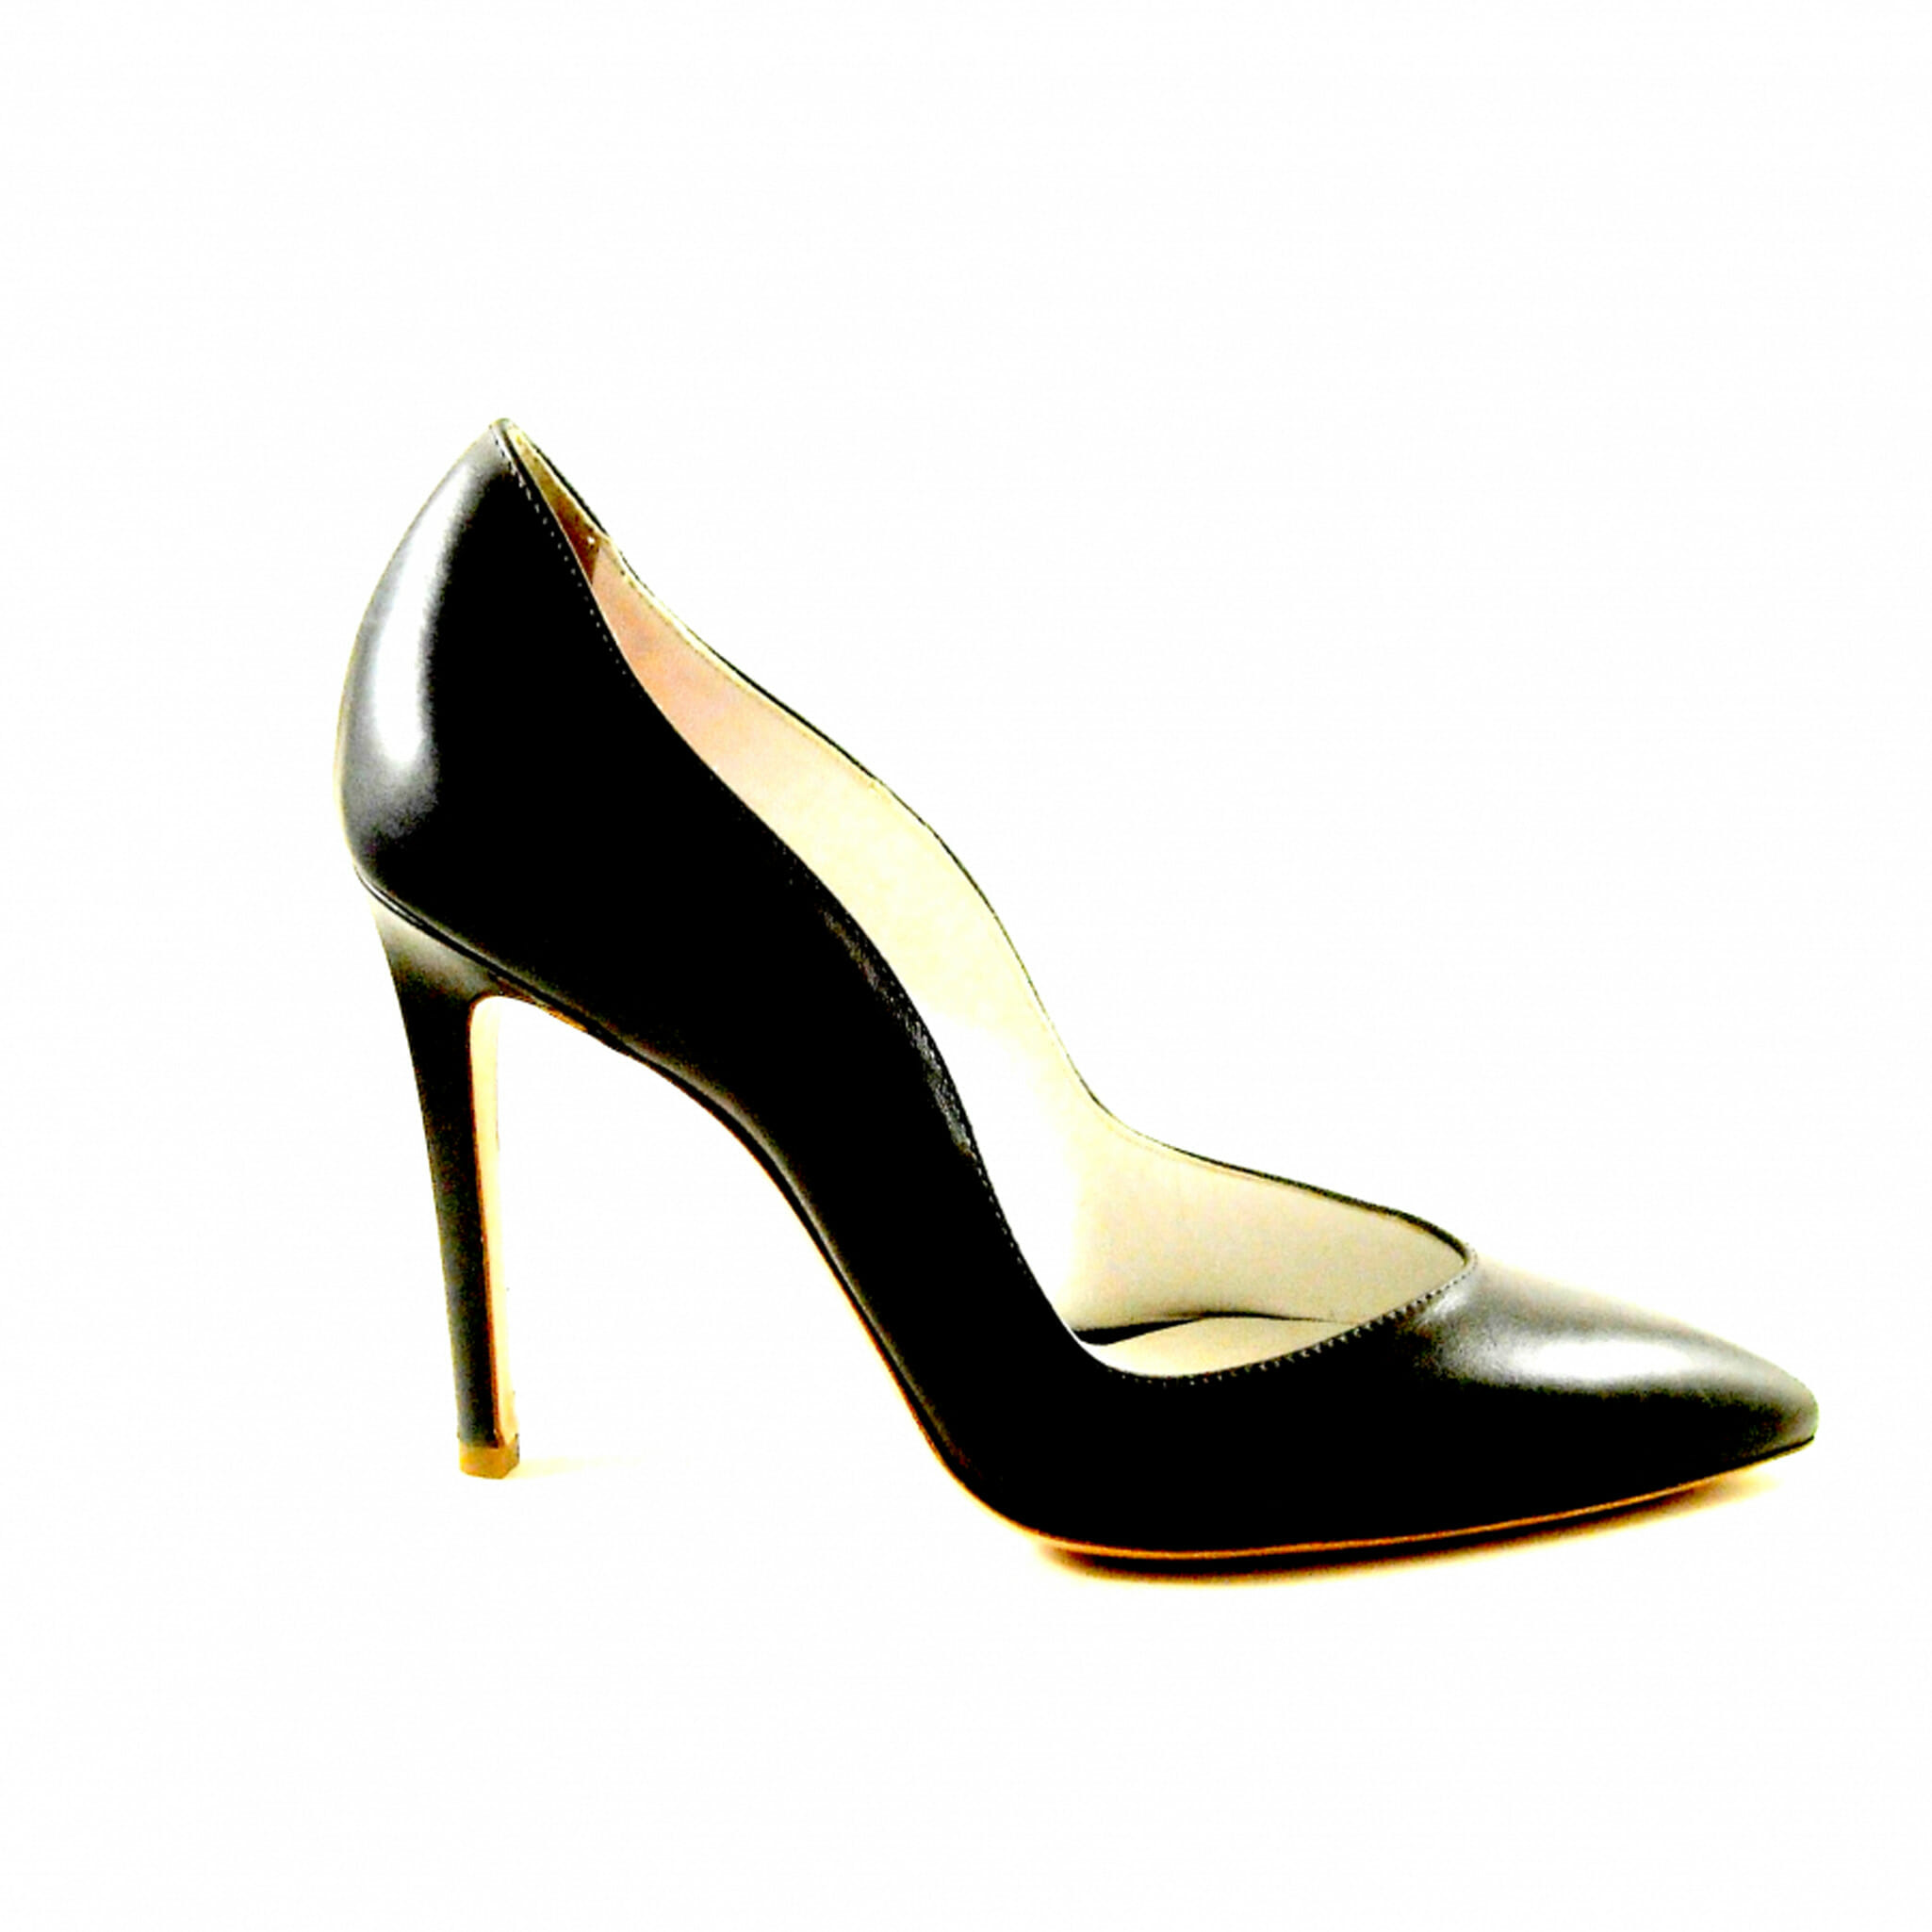 OL JIMMY Shoes - Greta Pump Shoes - The Elegant You Store